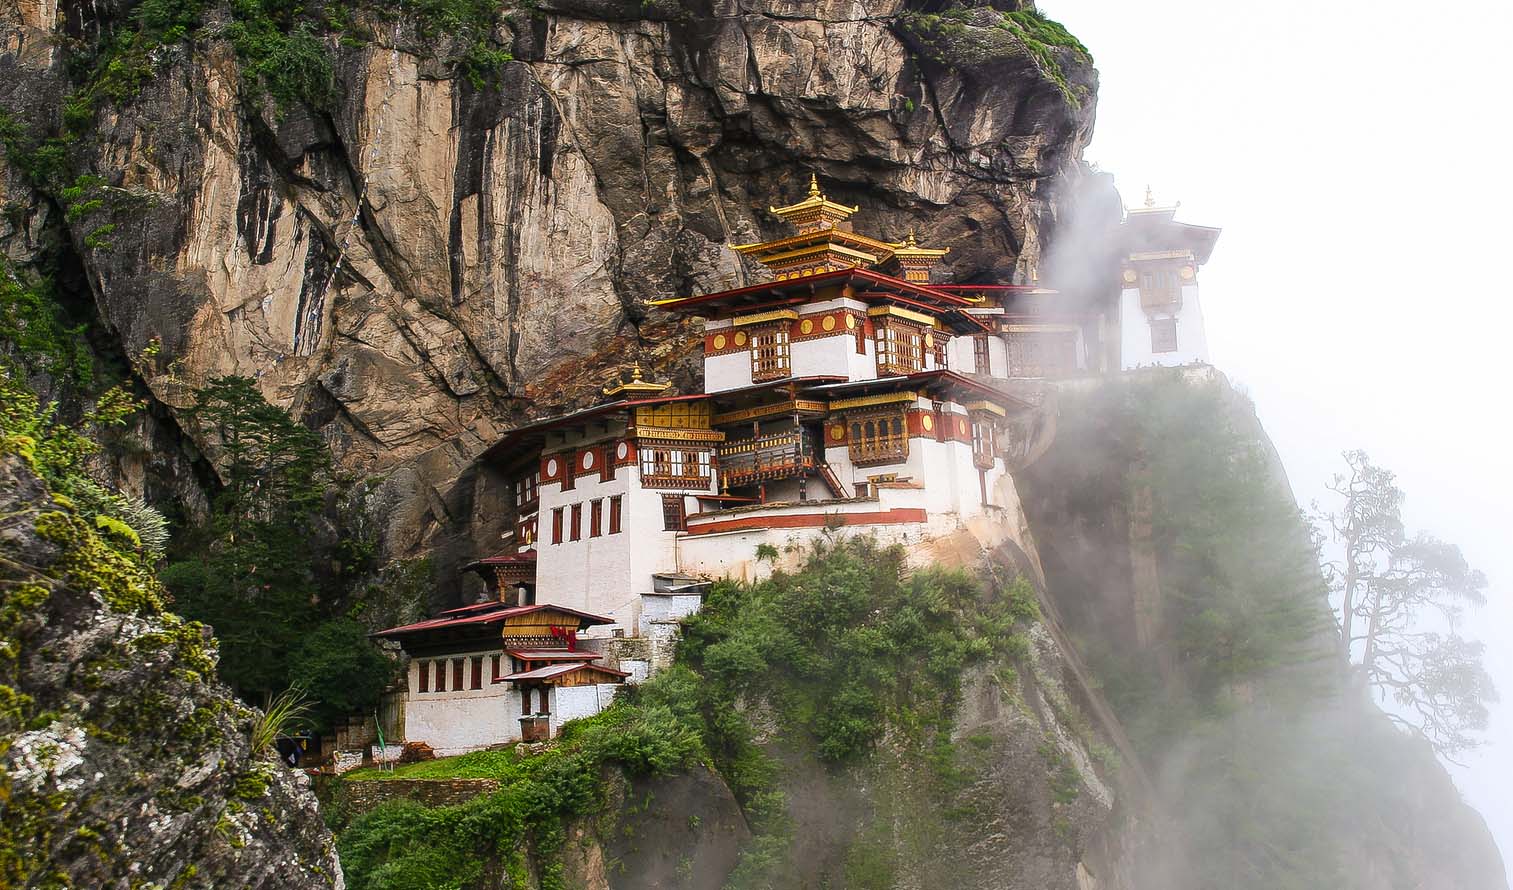 Taktsang Palphug Monastery (The Tiger's Nest), Bhutan